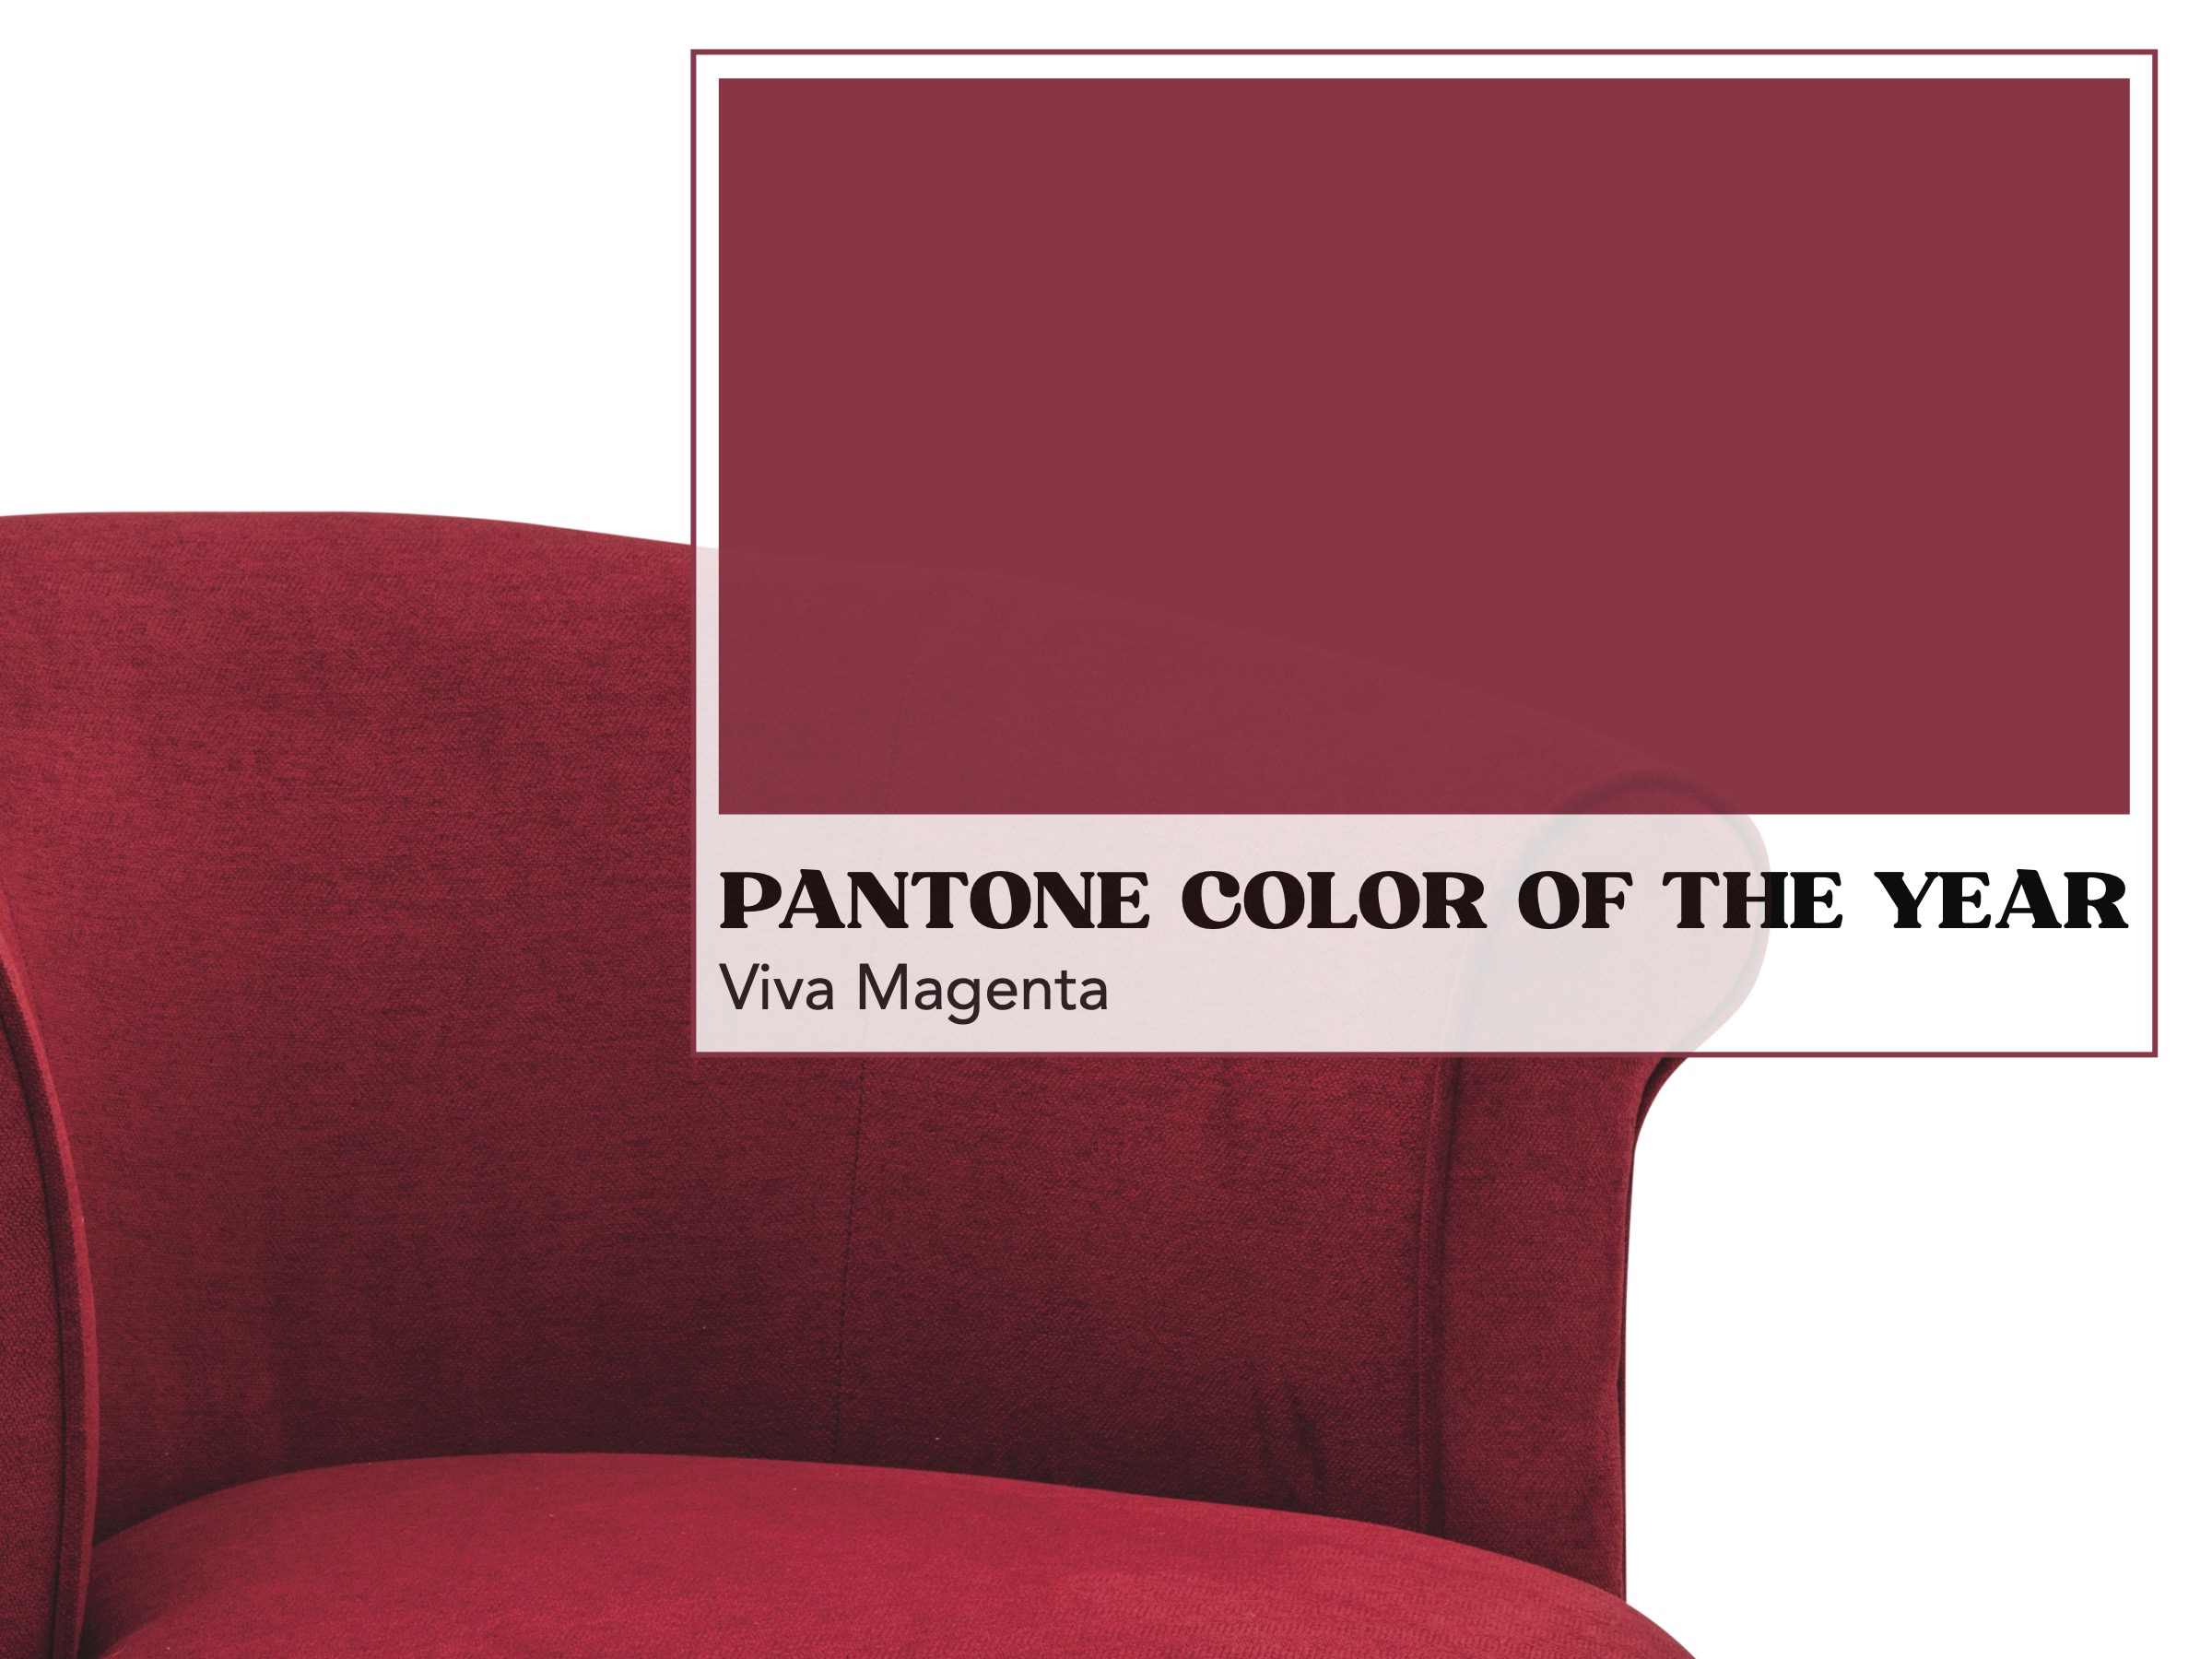 Pantone Color of the Year. Viva Magenta.